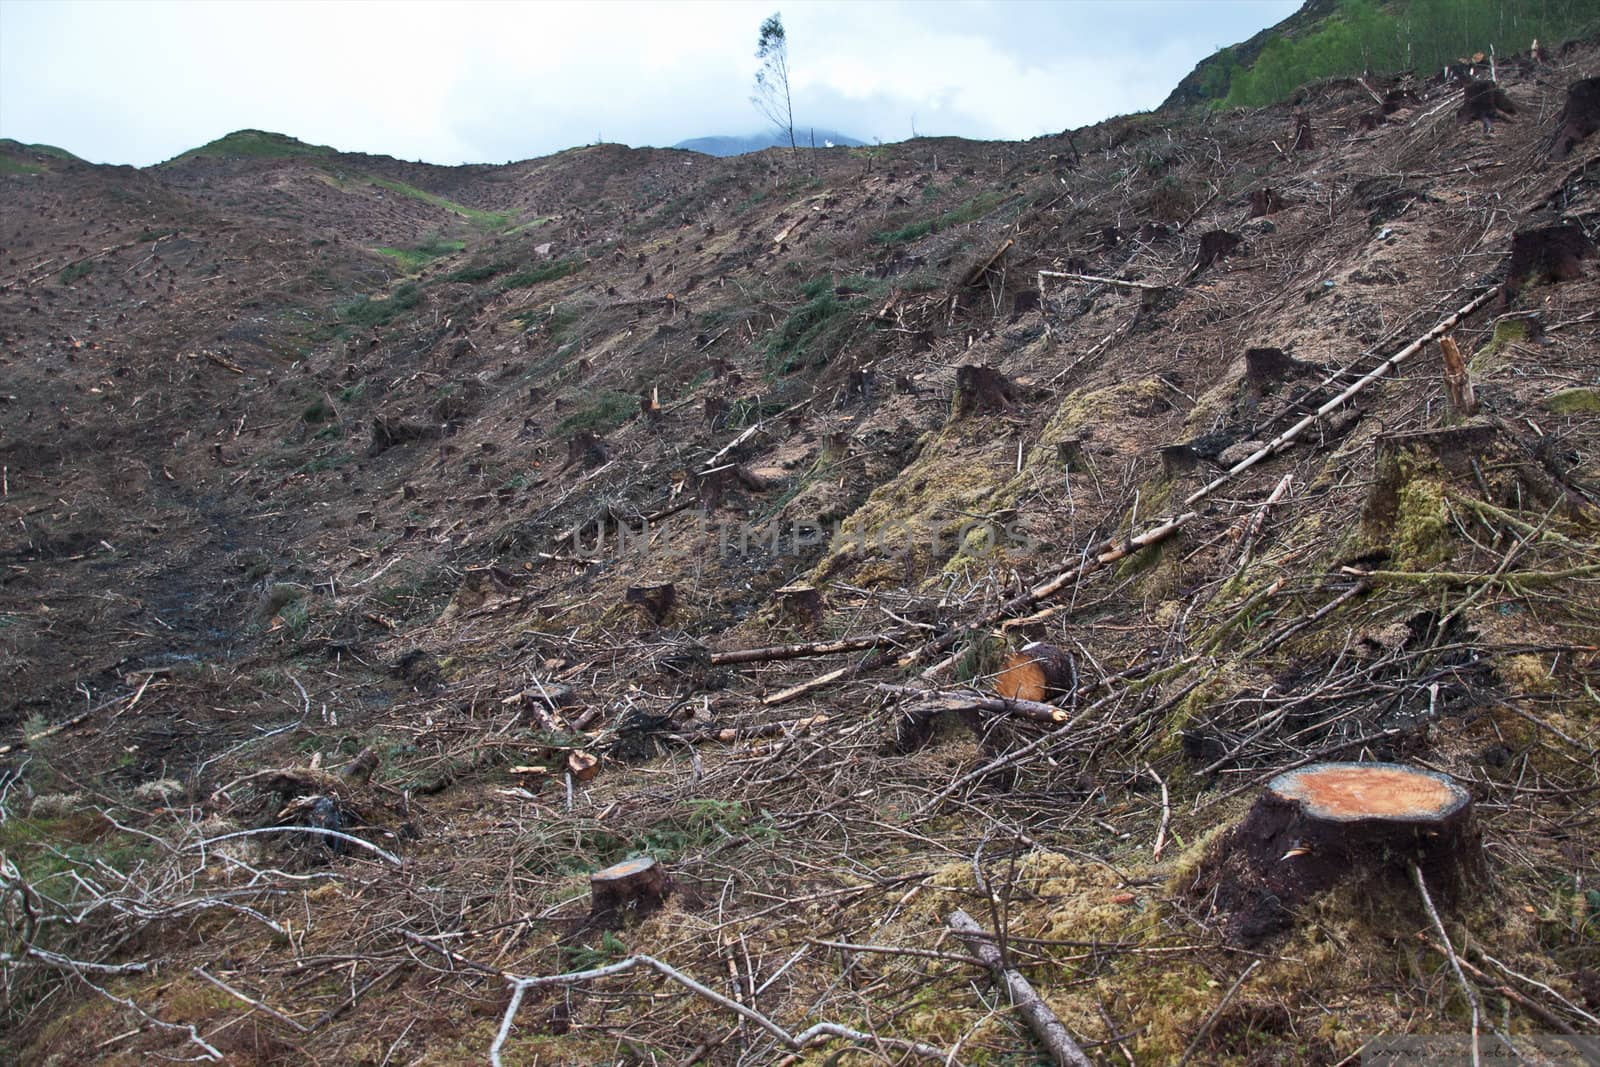 Clear cut logging near Ben Lomond, Scotland by tyroneburkemedia@gmail.com